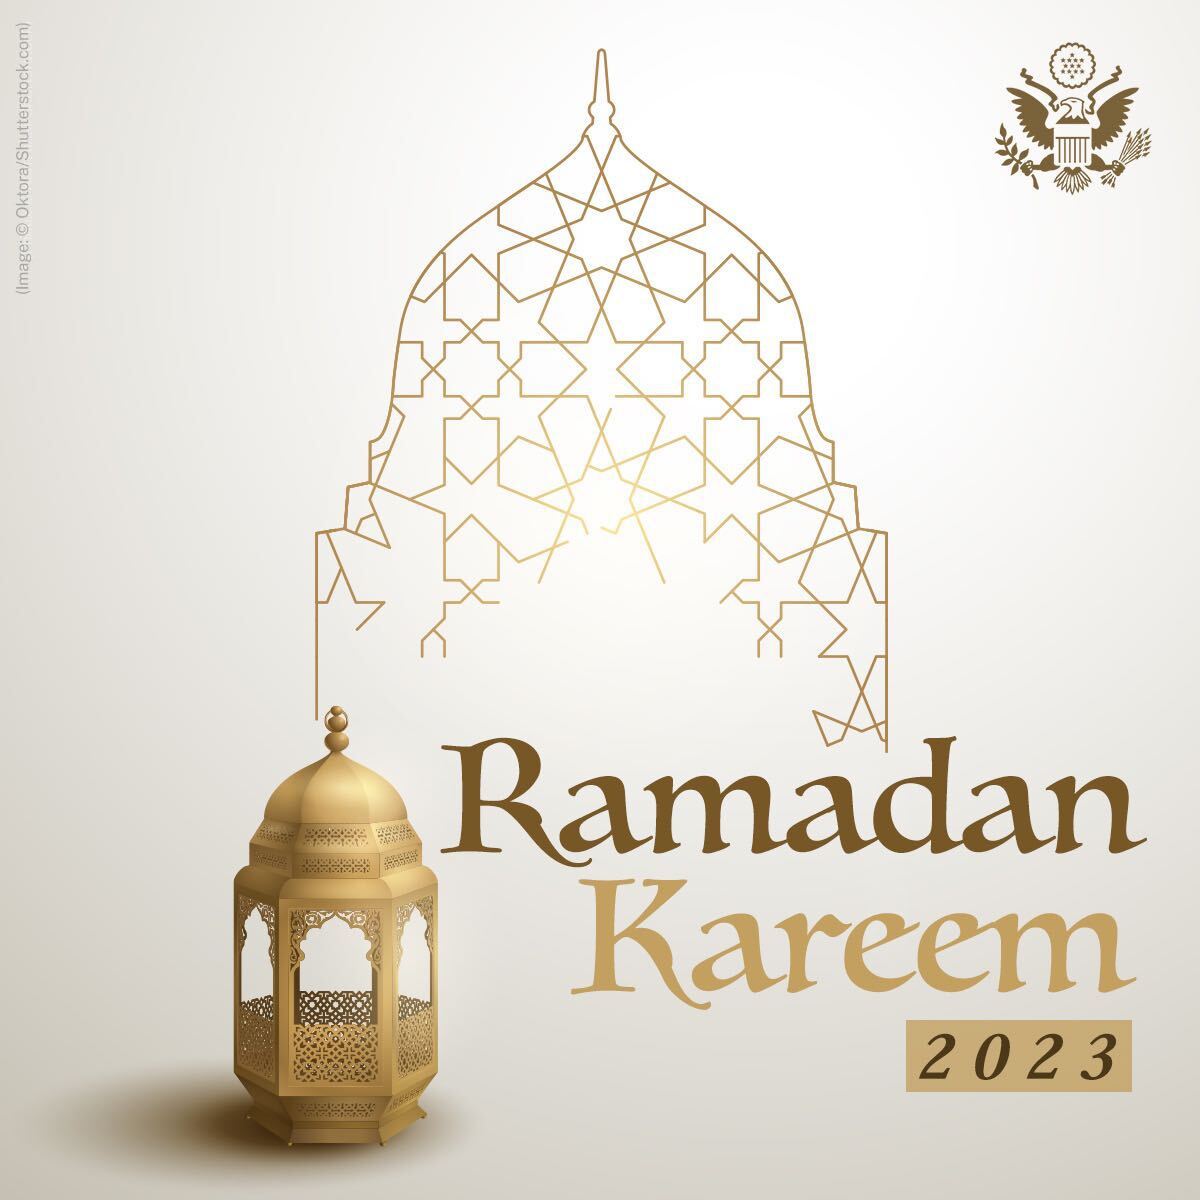 Incredible Collection of Full 4K Ramadan Kareem Images: Over 999+ Magnificent Ramadan Kareem Images